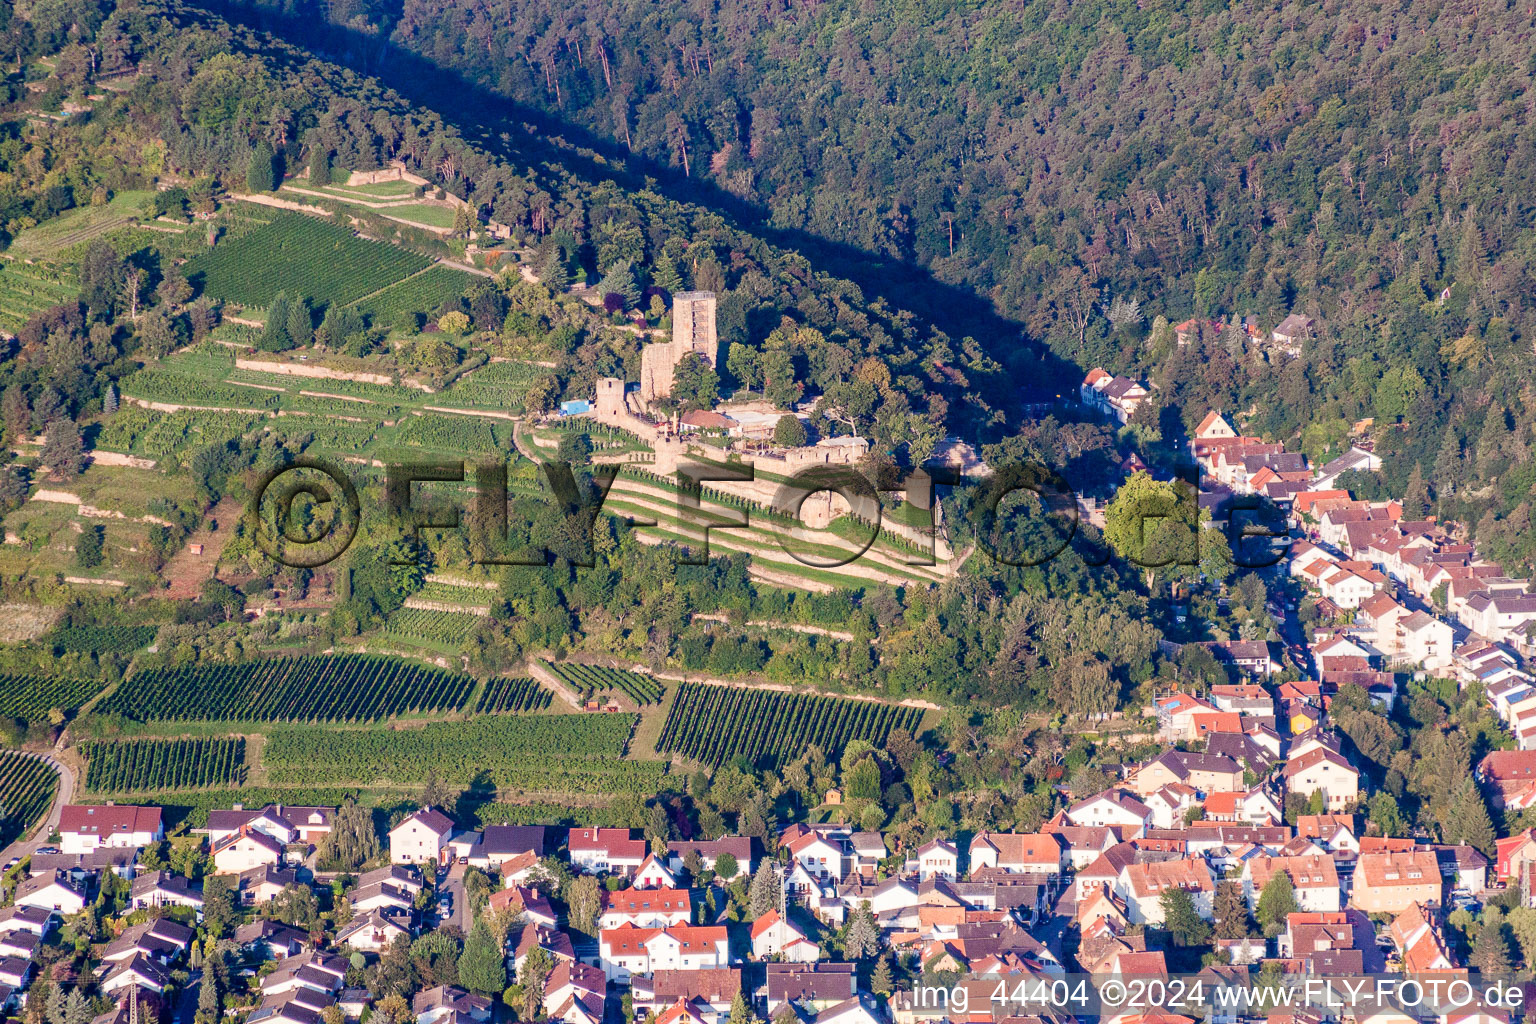 Aerial view of Ruins and vestiges of the former castle and fortress Wachtenburg (Ruin "Burg Wachenheim") in Wachenheim an der Weinstrasse in the state Rhineland-Palatinate, Germany